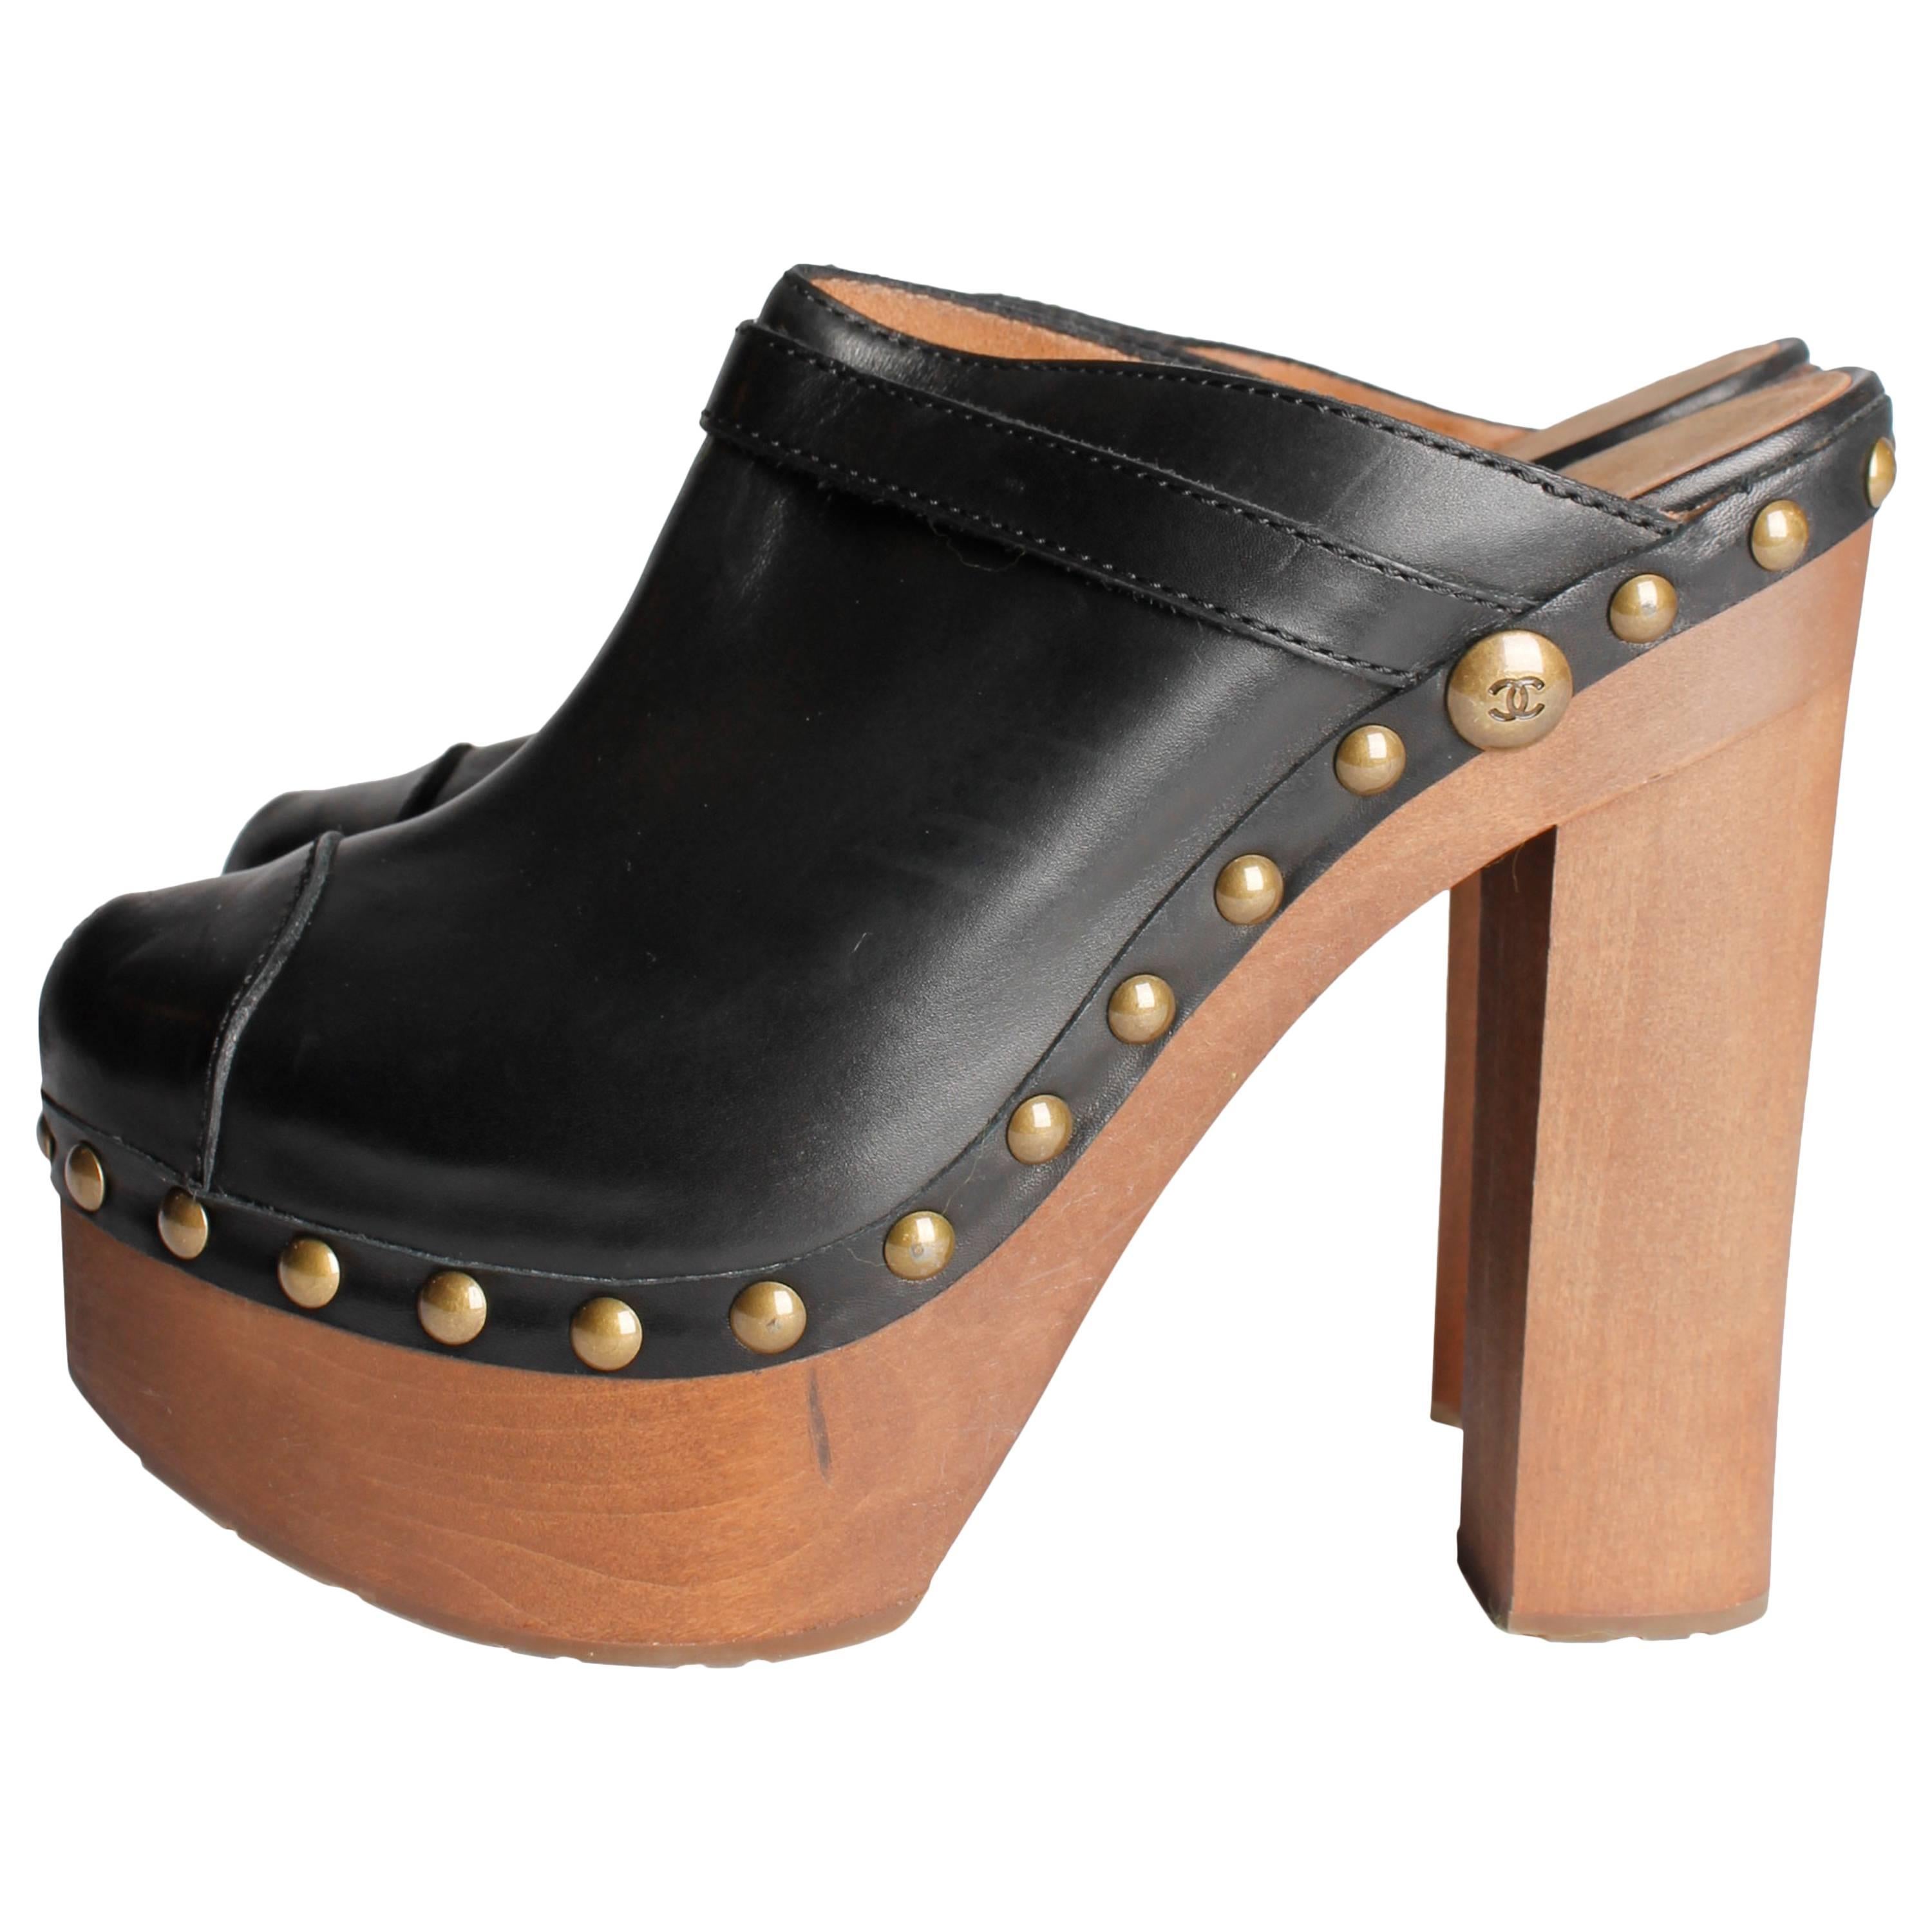 Chanel Heel Clogs - black leather